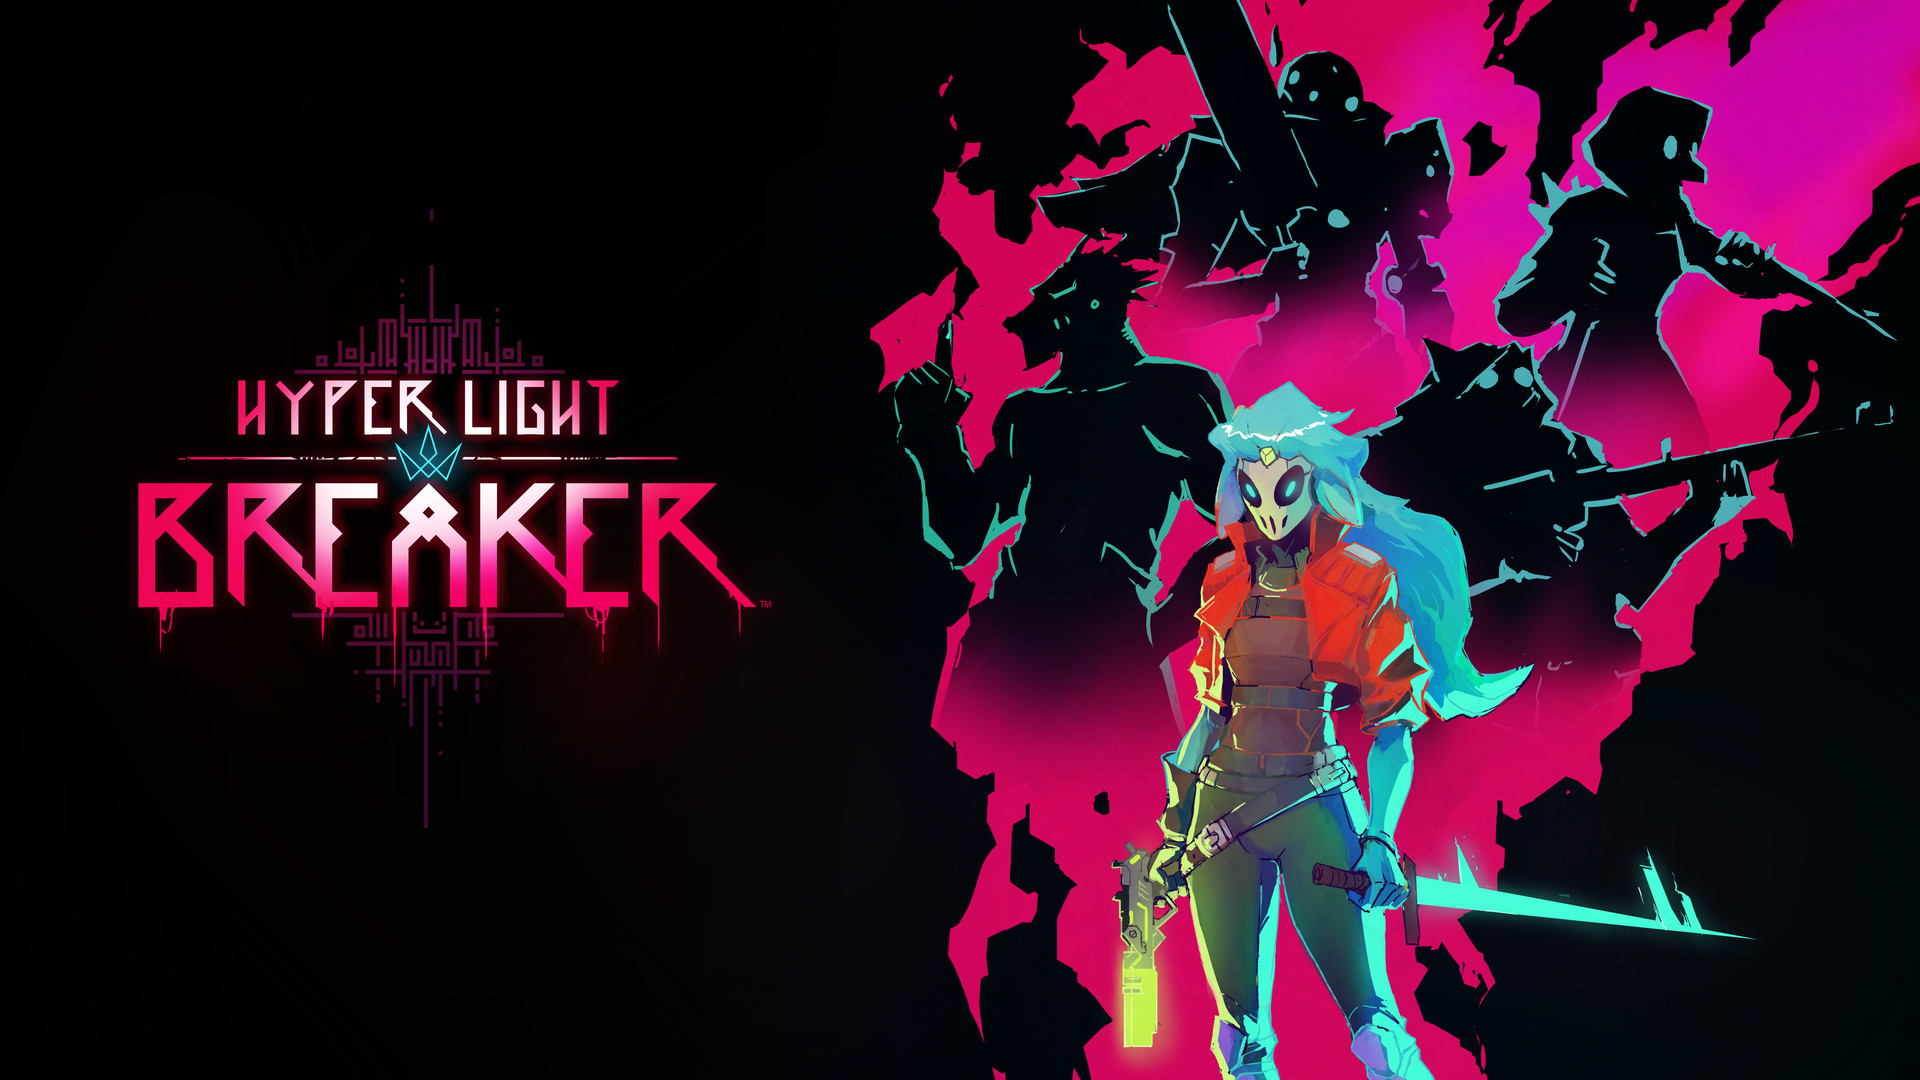 Hyper Light Breaker Game News Indie Game Fans